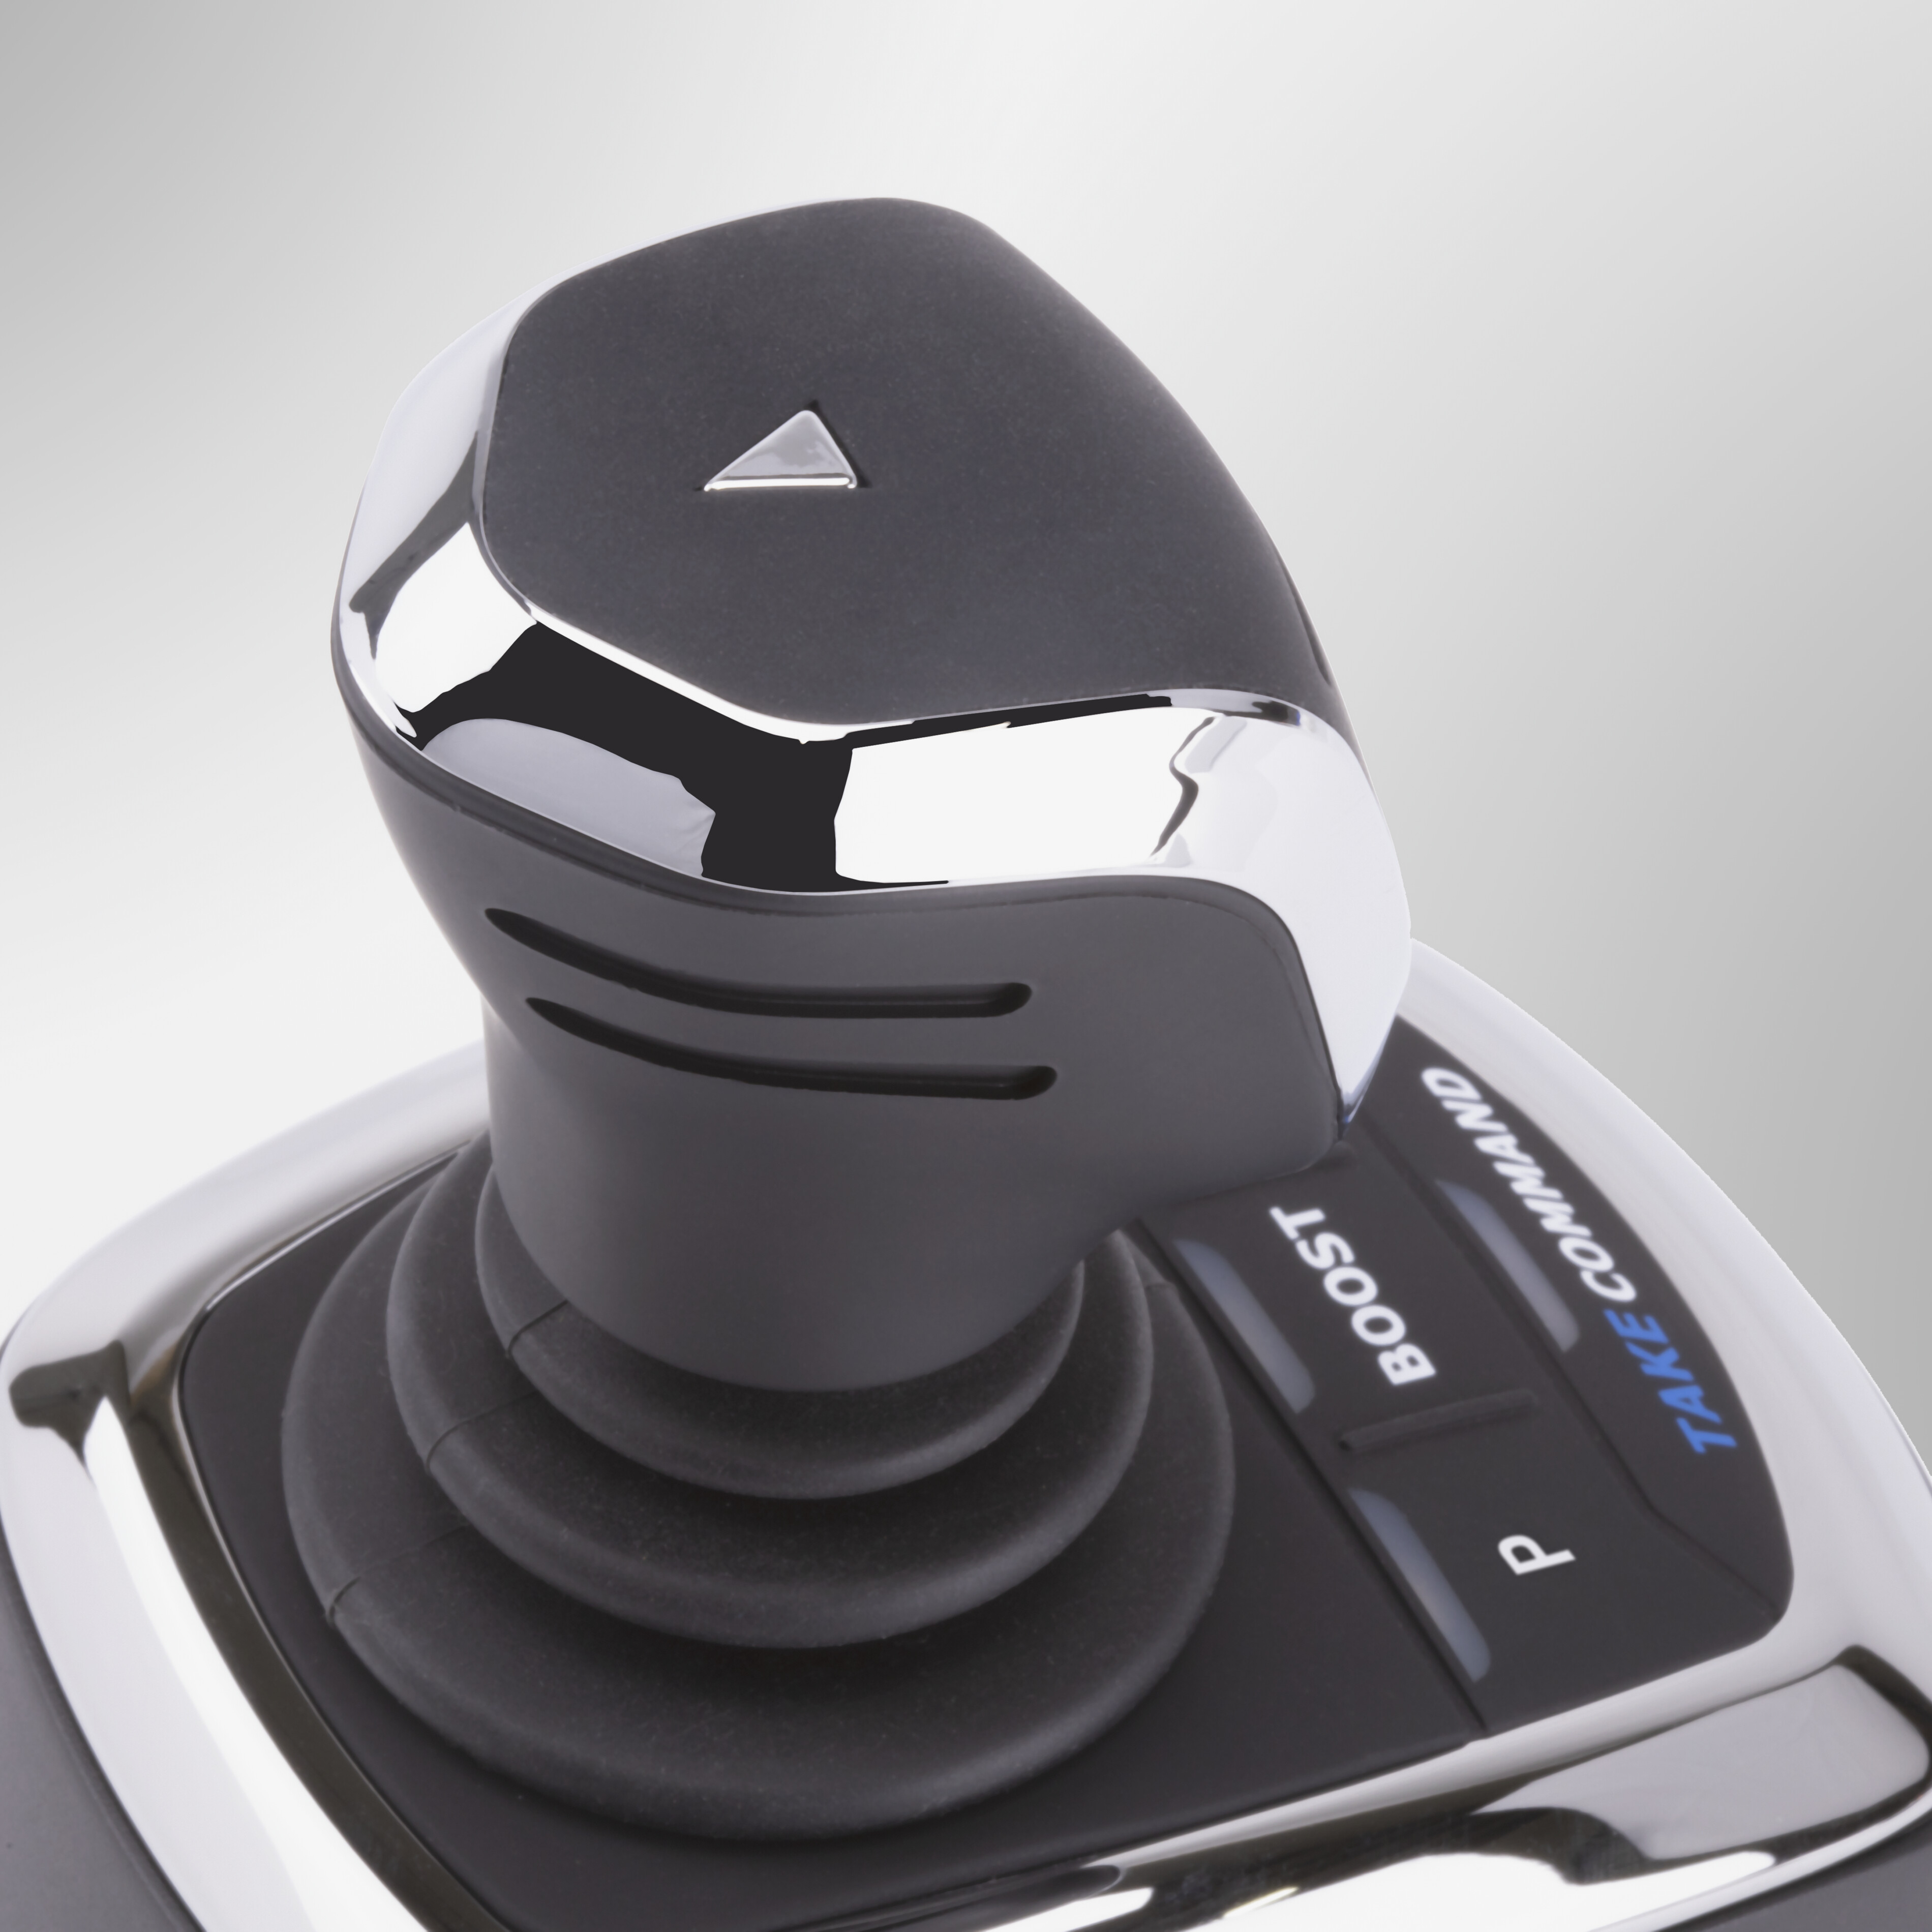 Dometic Optimus 360 Joystick转向控制系统